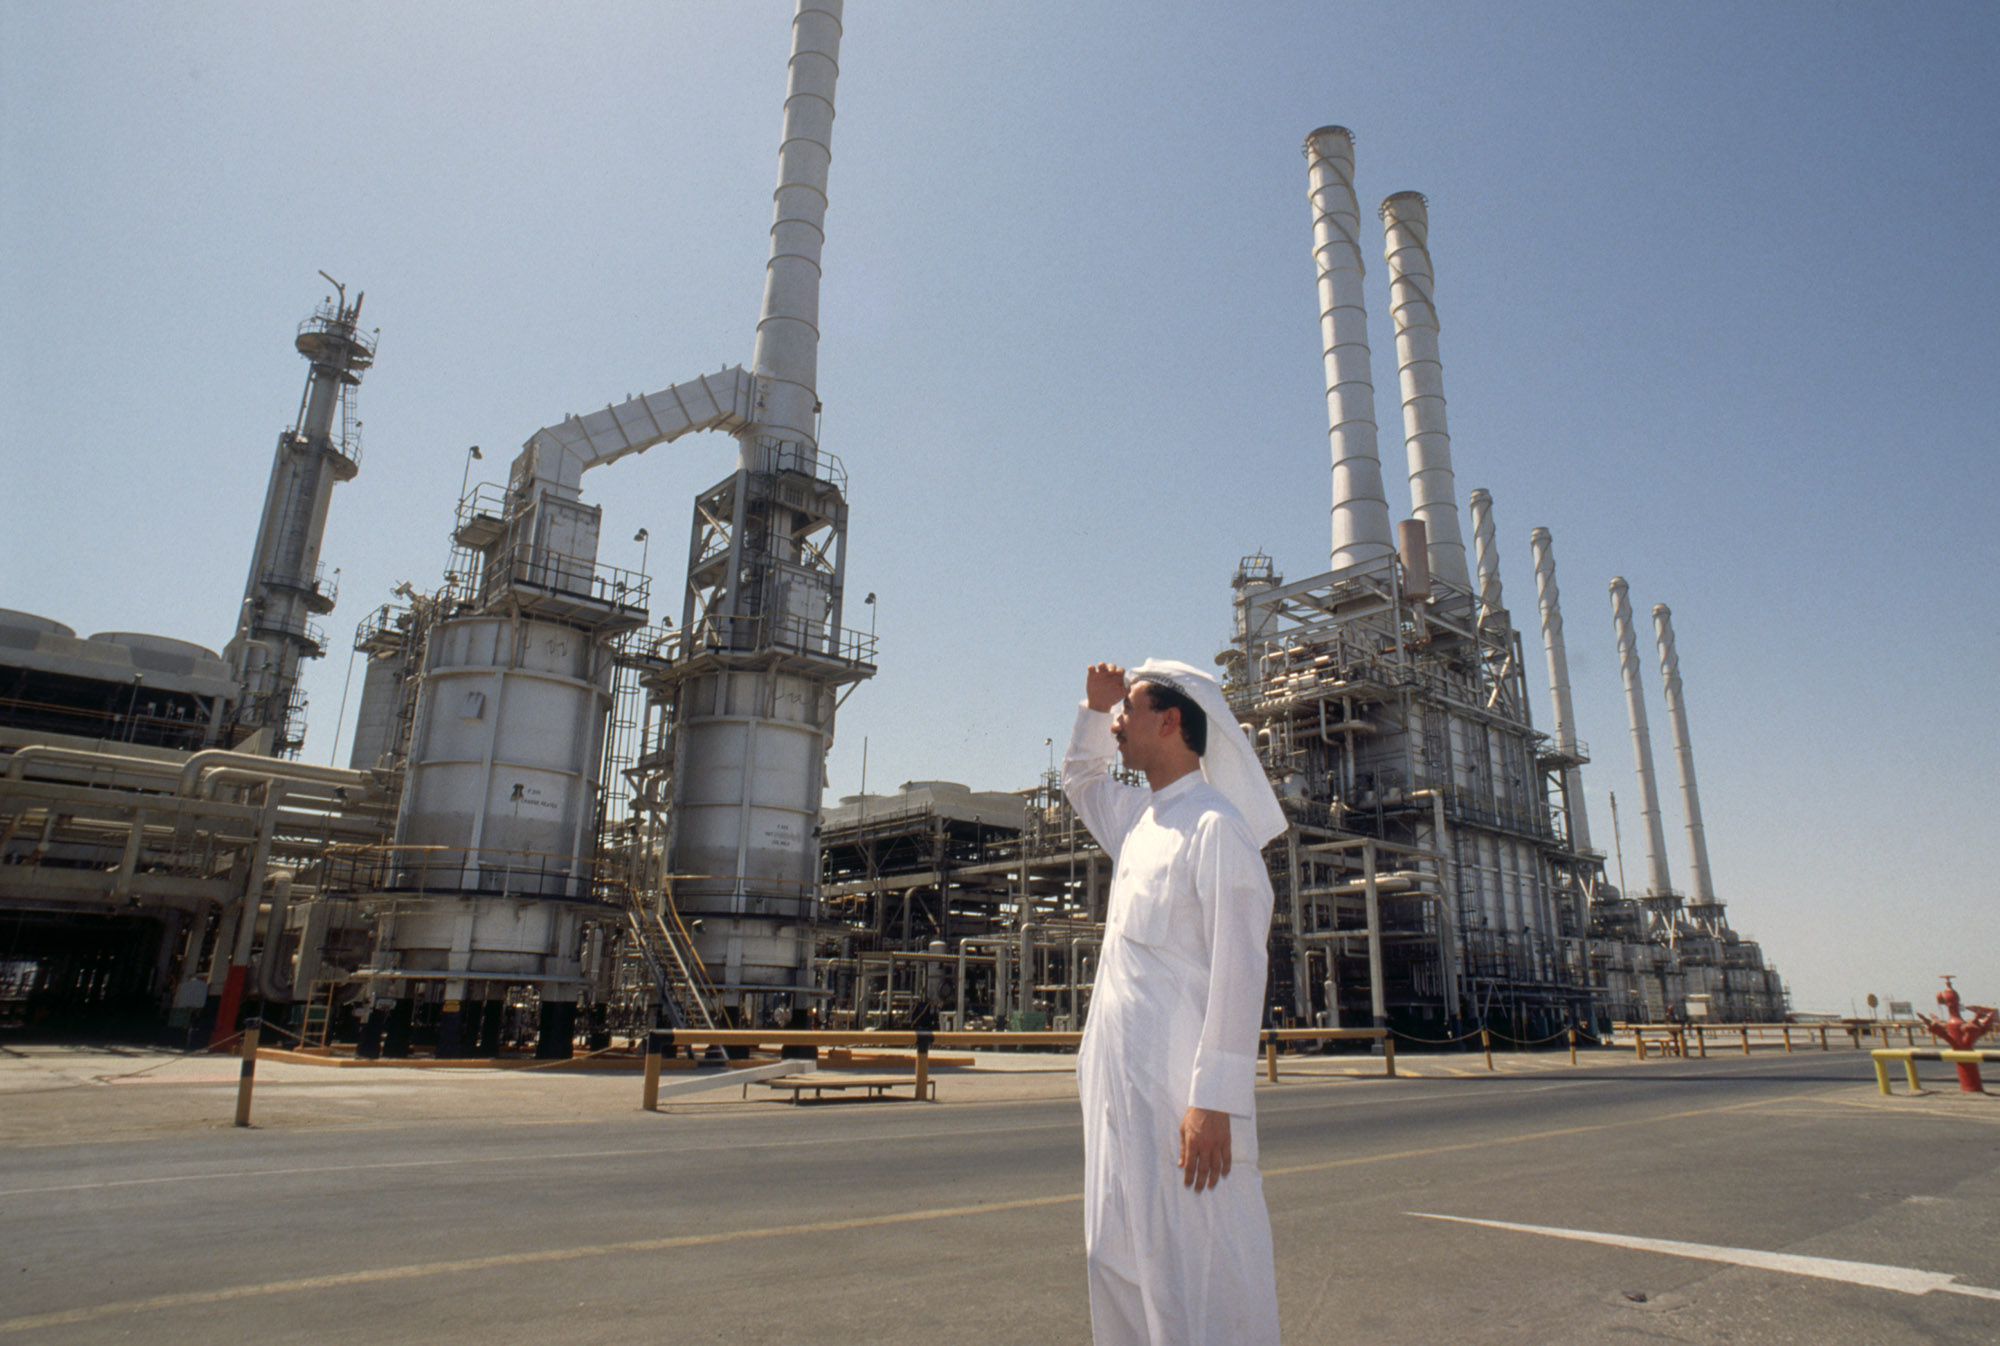 The oil refinery of Ras-Tanura, Saudi Arabia.